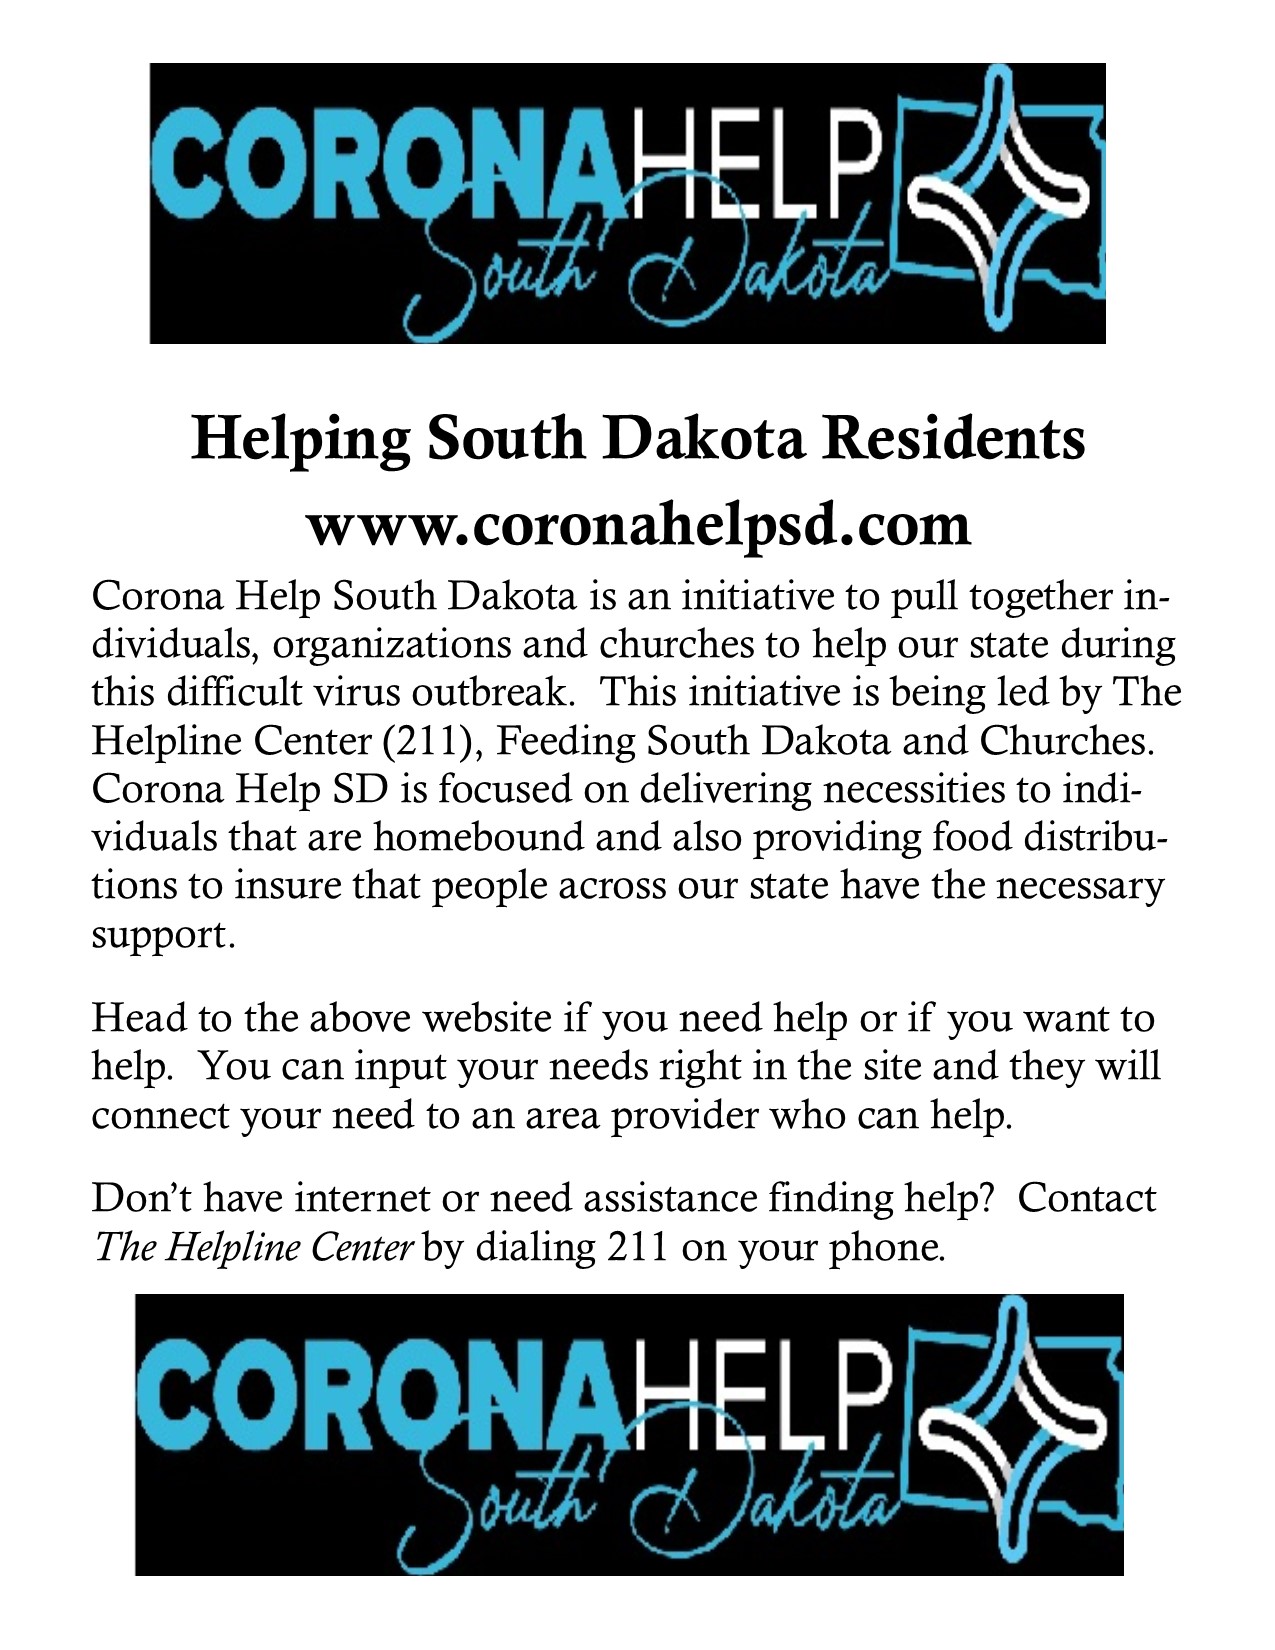 Corona Help South Dakota